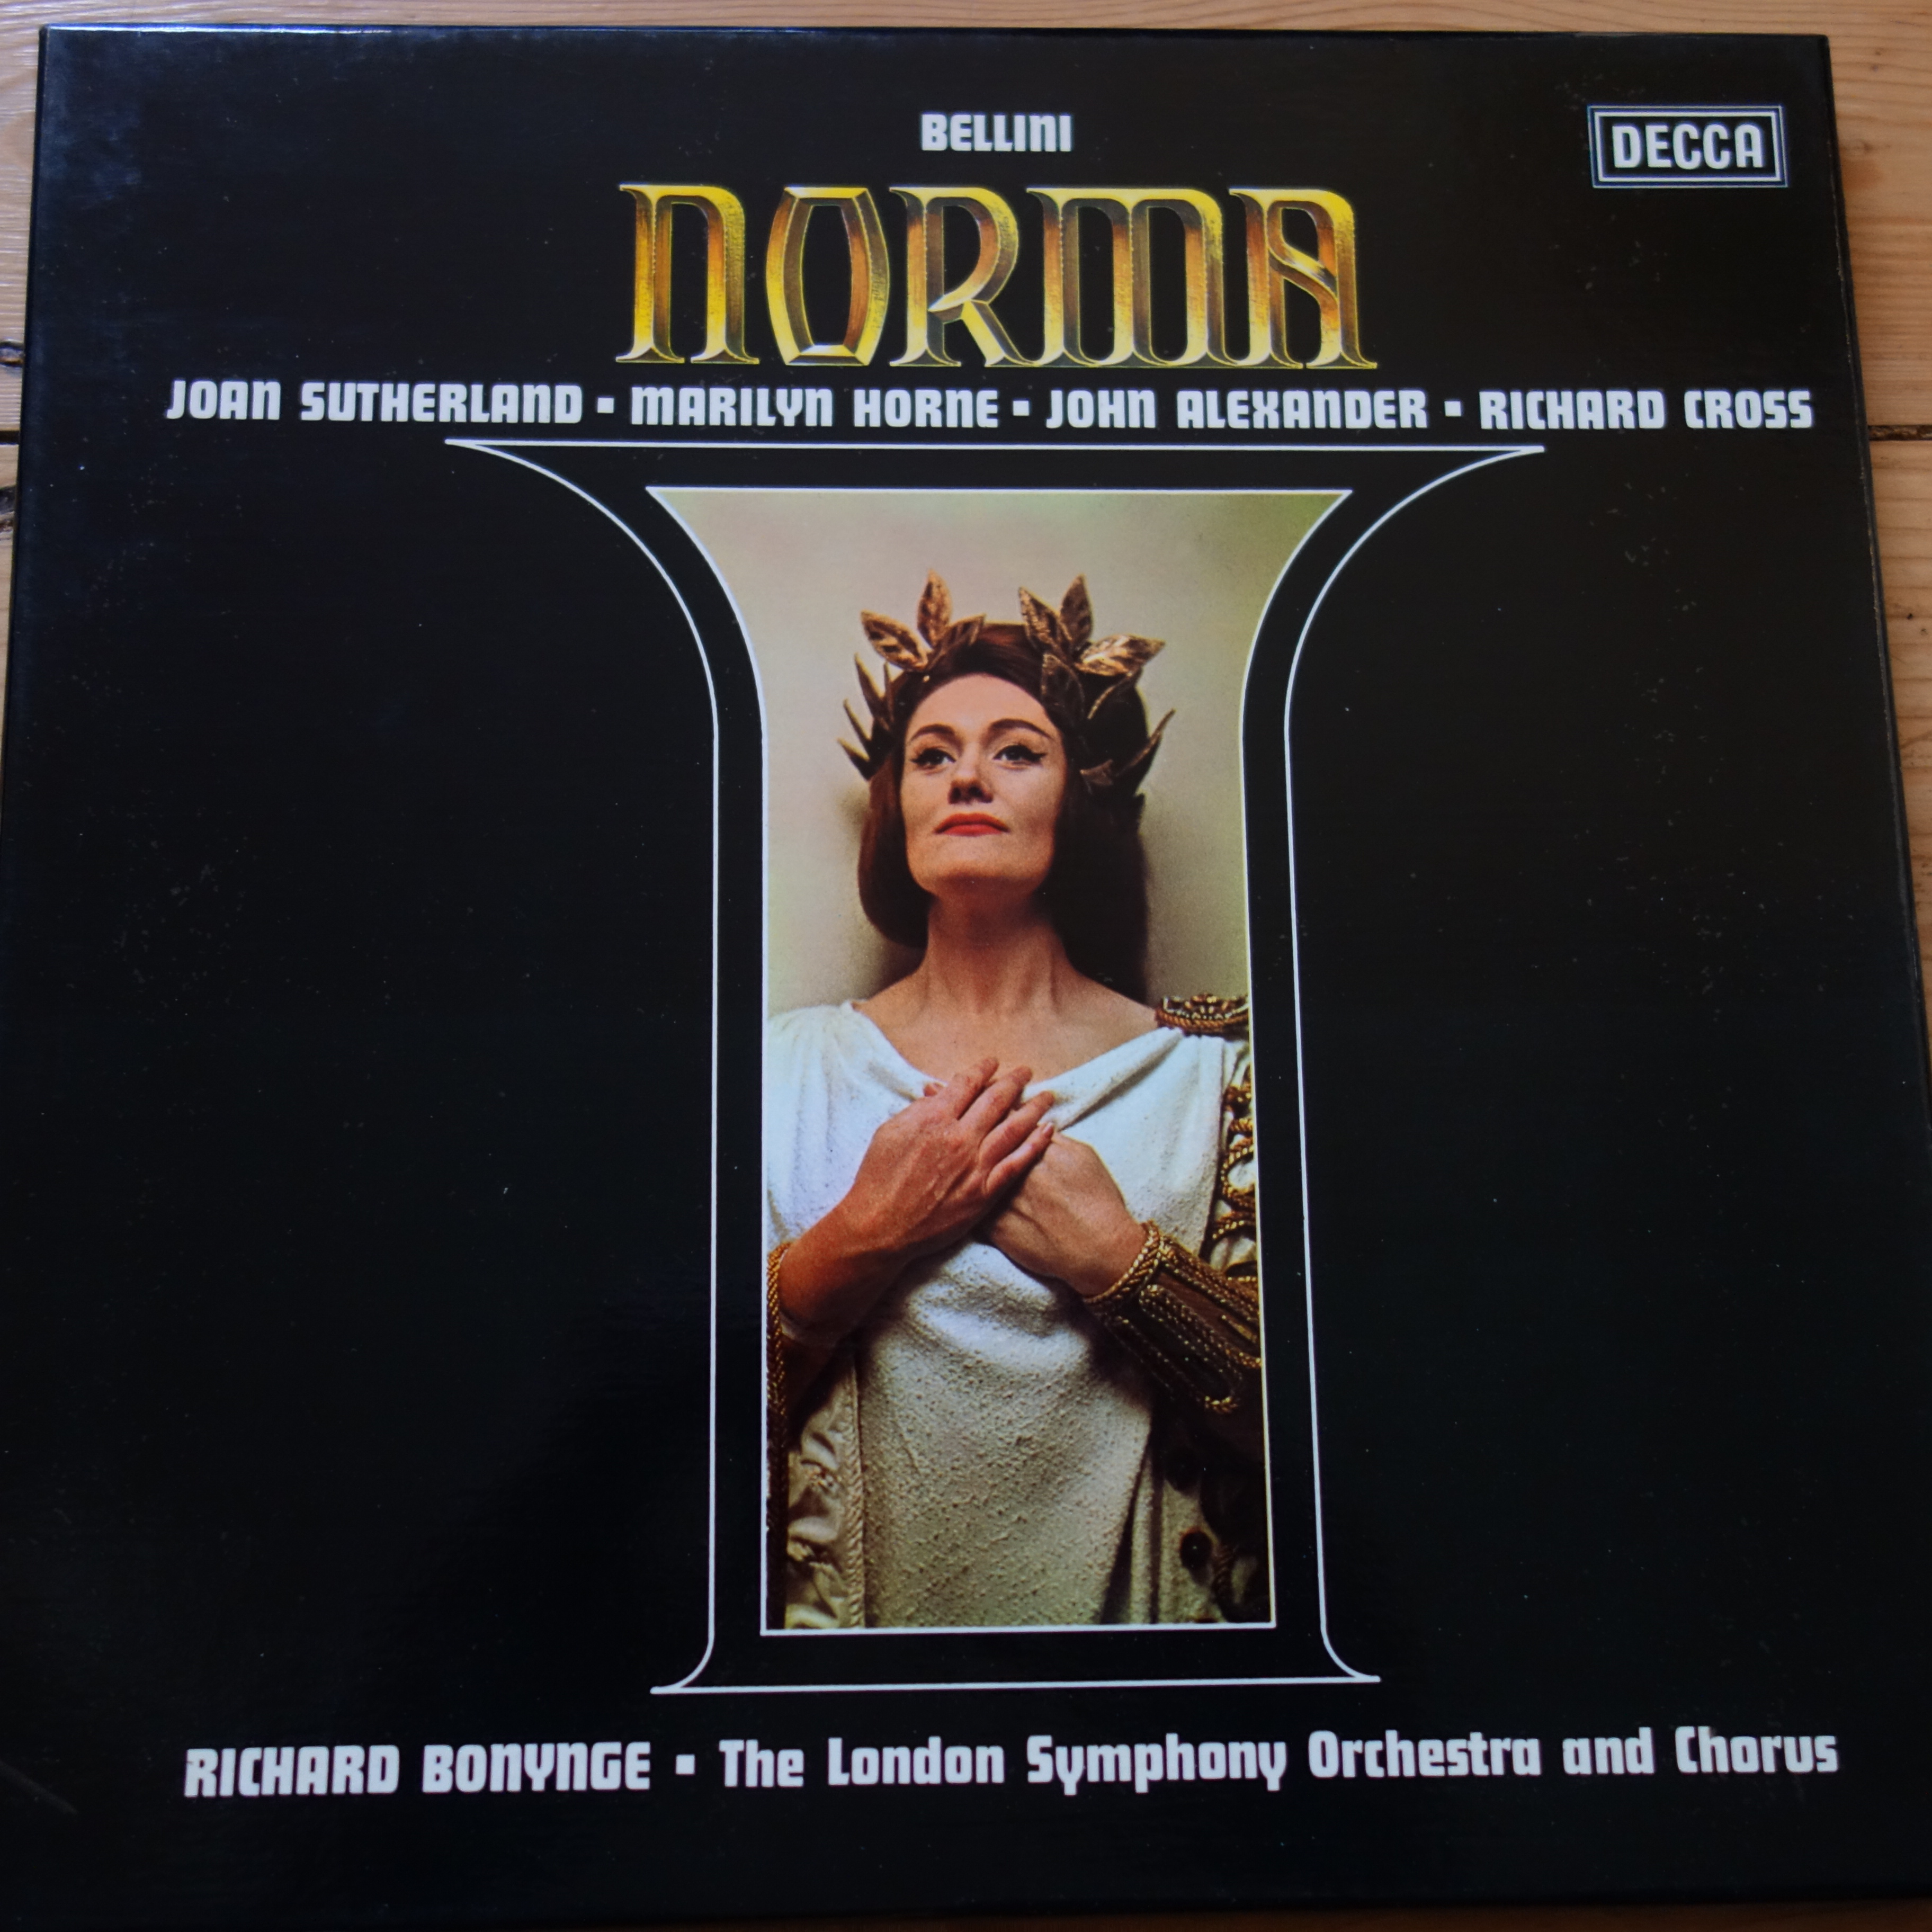 SET 424-6 Bellini Norma / Sutherland, etc. / Bonynge 3 LP box set